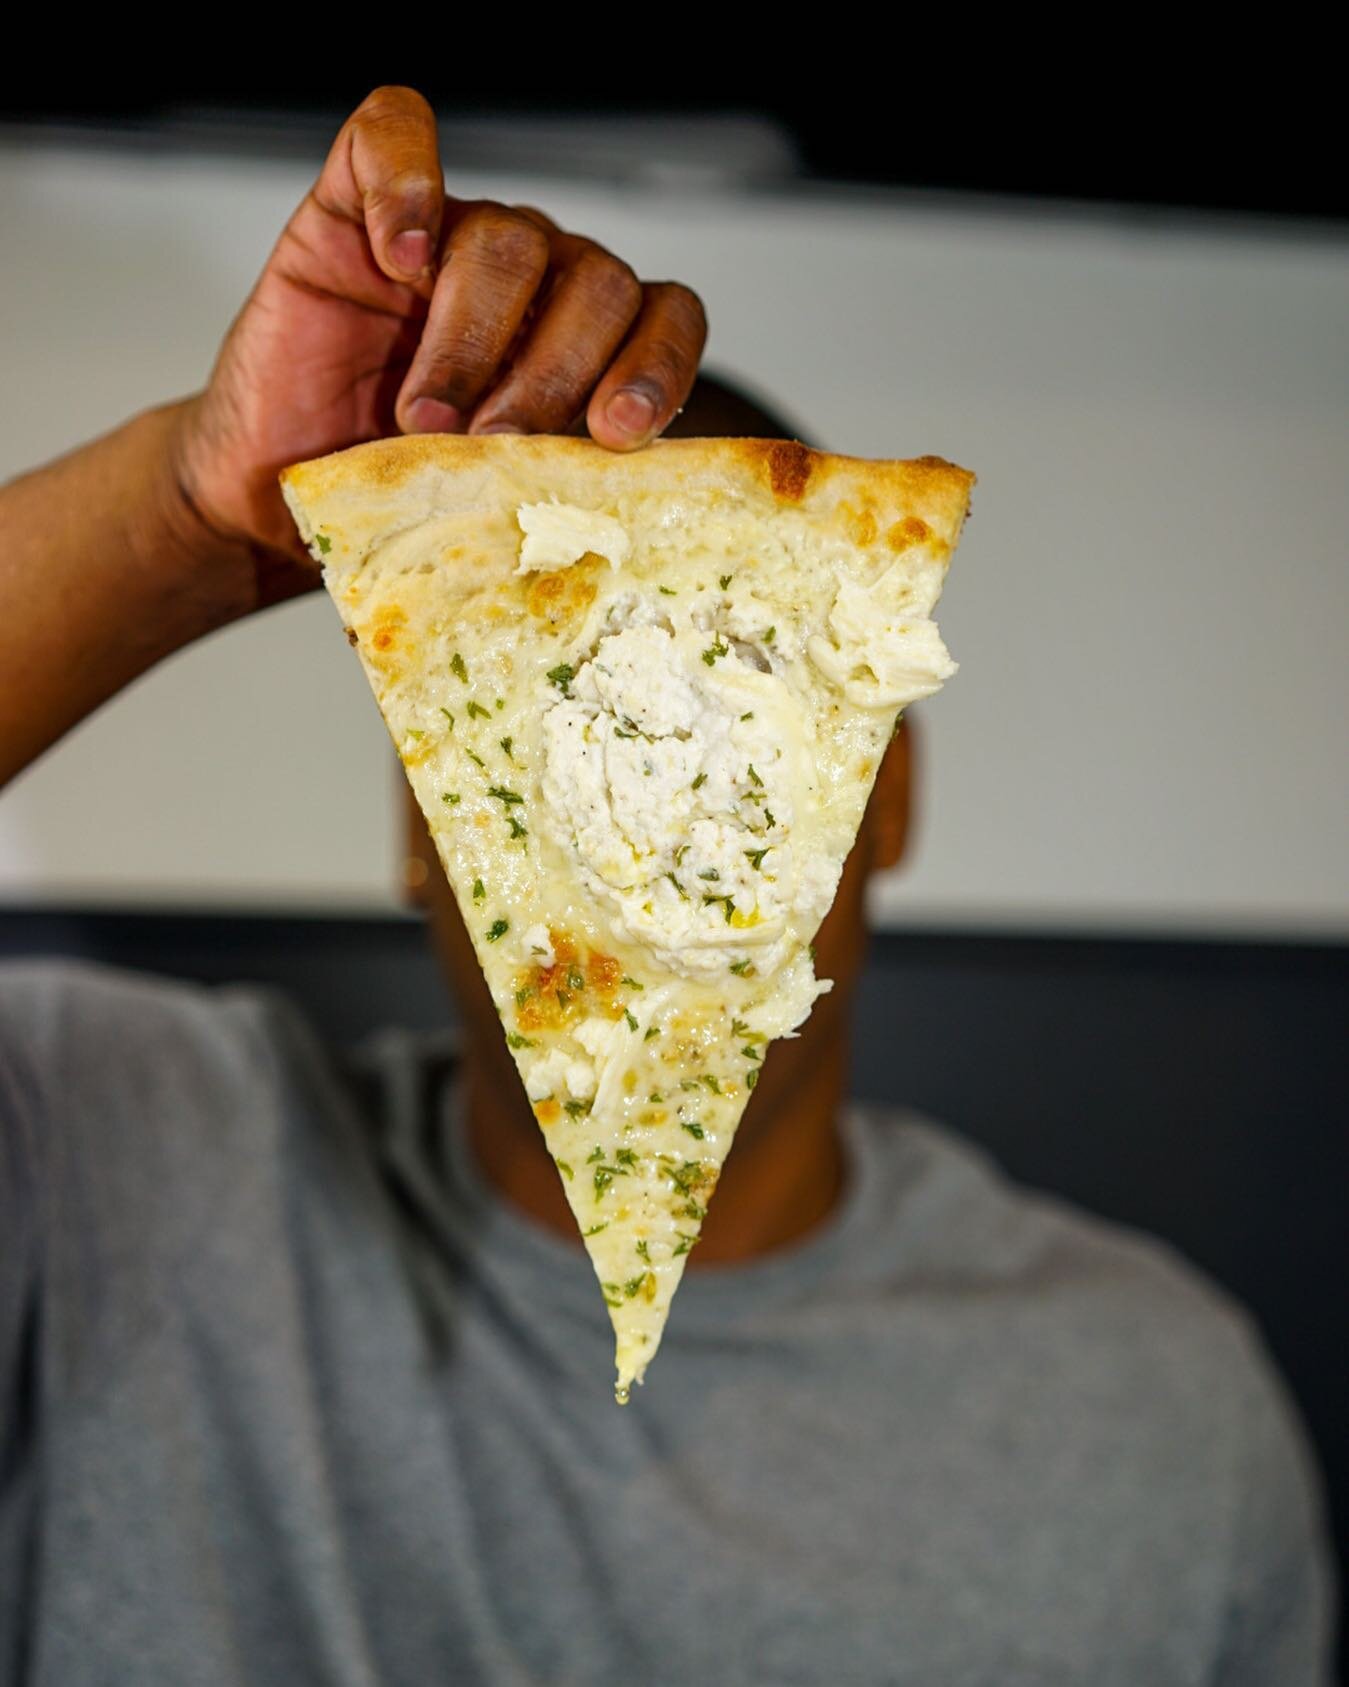 𝐅𝐫𝐢𝐝𝐚𝐲 🅿🅸🆉🆉🅰 🍕
⠀
𝗢𝗽𝗲𝗻 - 𝟭𝟬𝗽𝗺
⠀
⠀
⠀
#pielandspizza #atlpizza #atlantapizza #discoveratl #discoveratlanta #atlrestaurants #eathereatl #pizzatime #fridaypizza #pizzanight